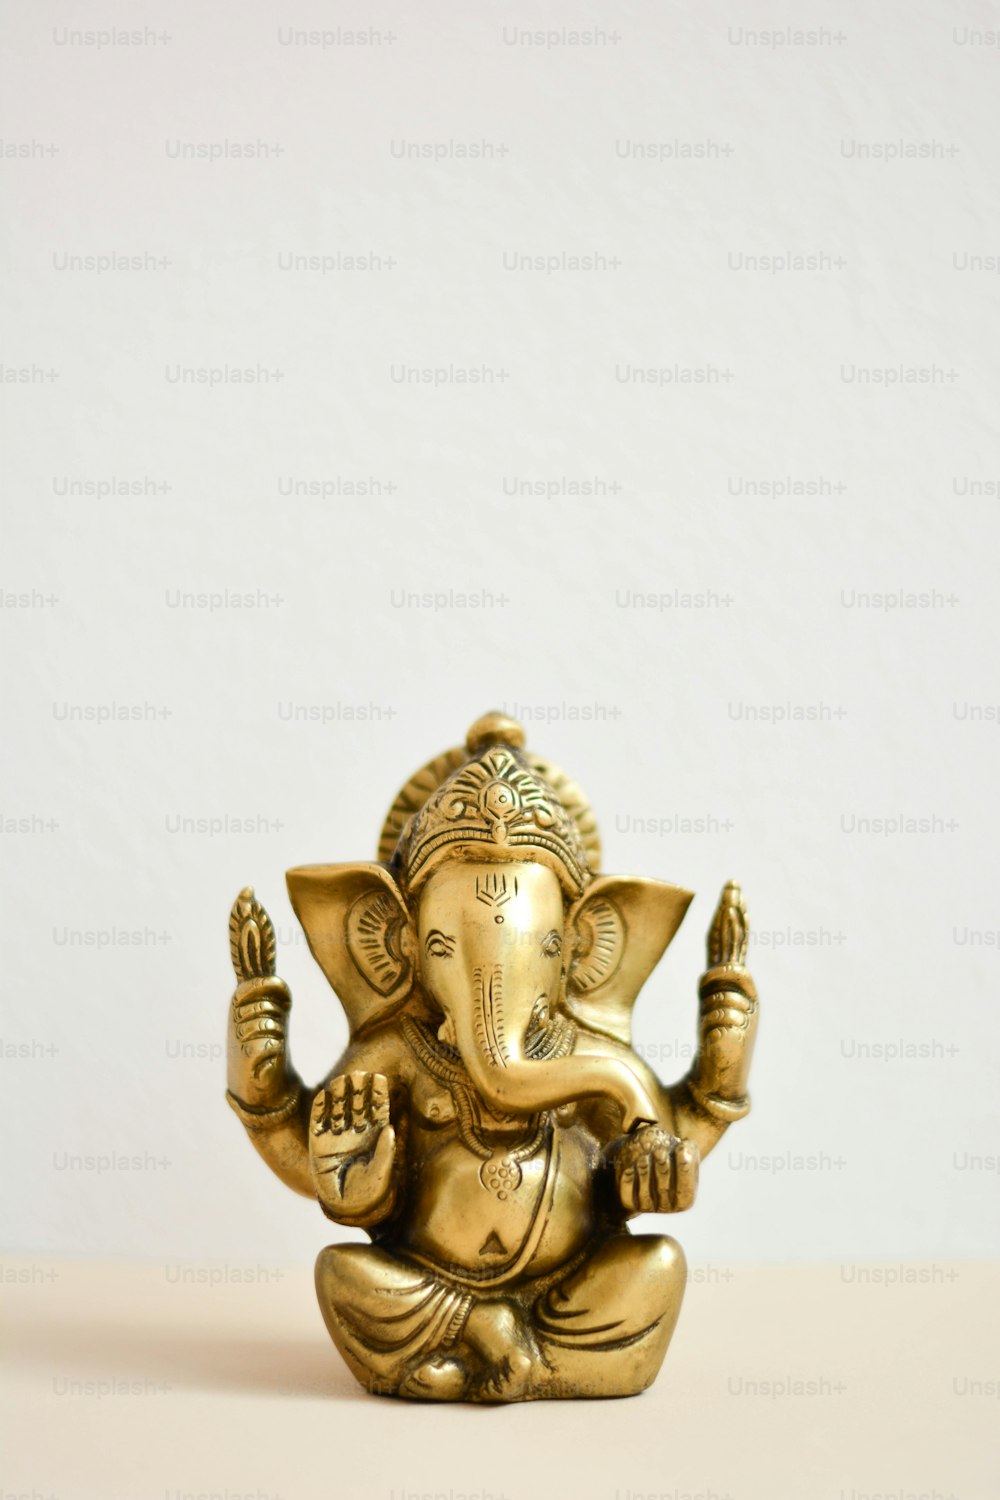 A small gold statue photo – Hindu Image on Unsplash